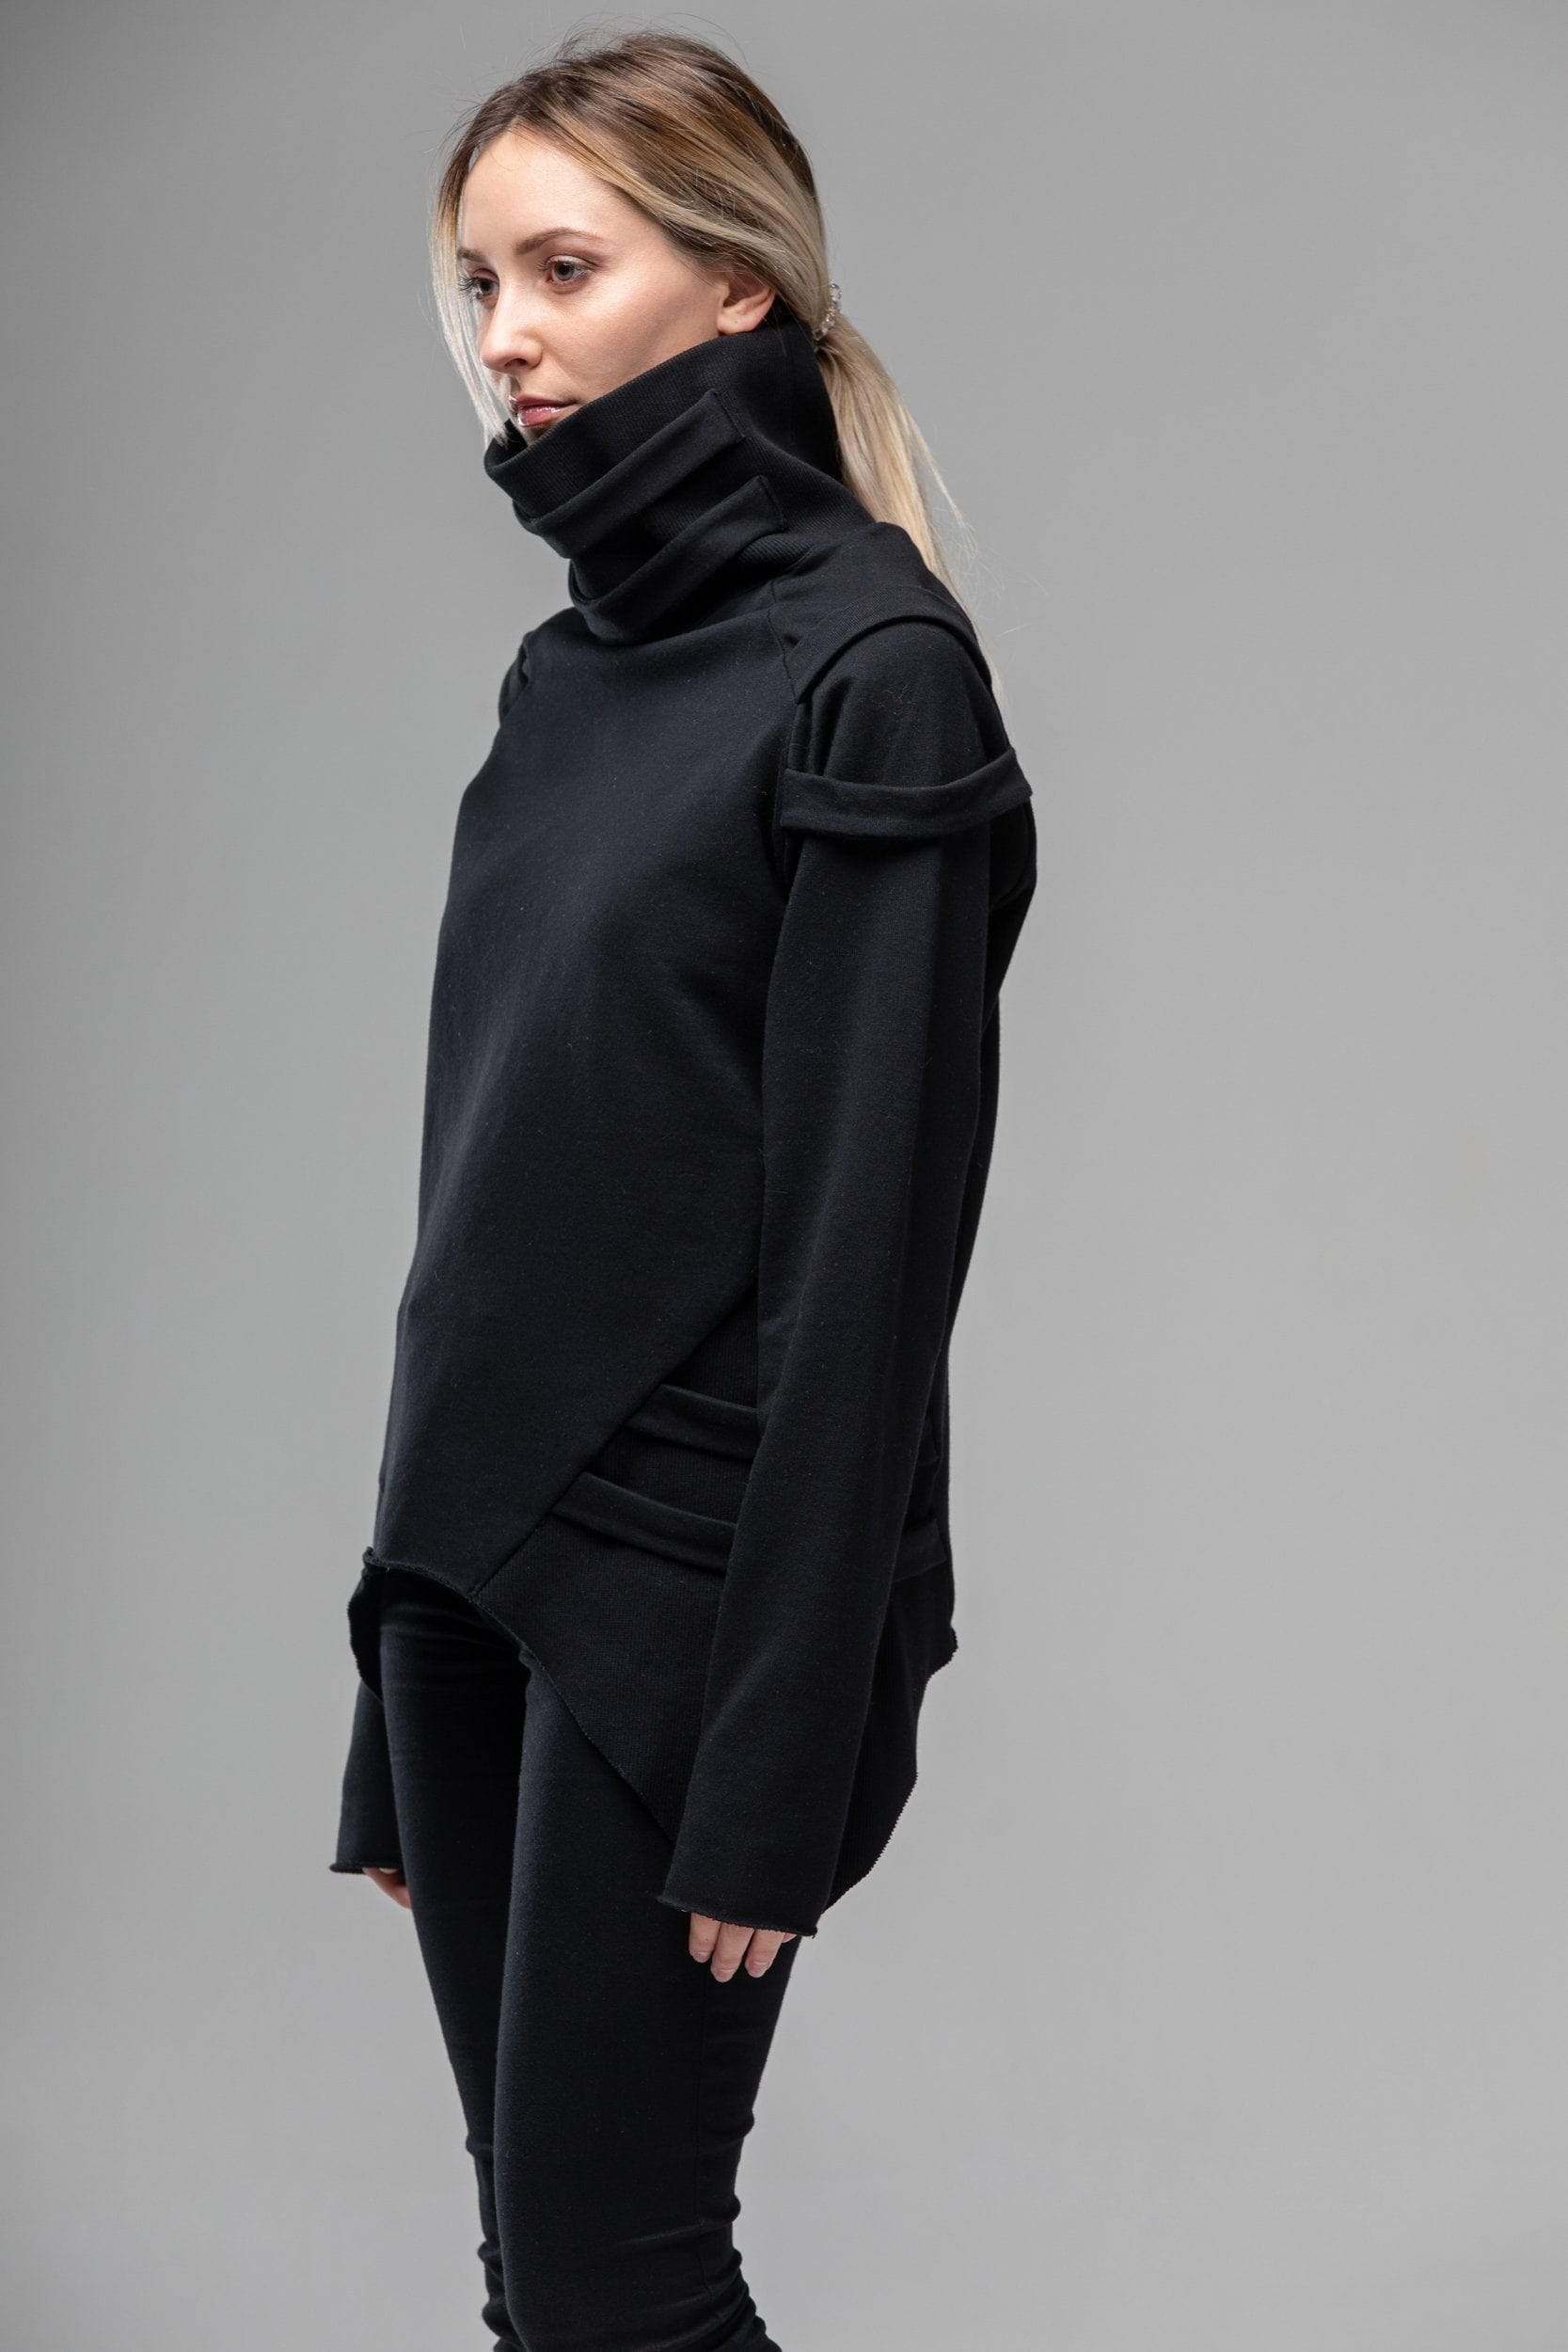 MDNT45 Sweaters, Tunics & Tops Cyberpunk Gothic Turtleneck Sweater